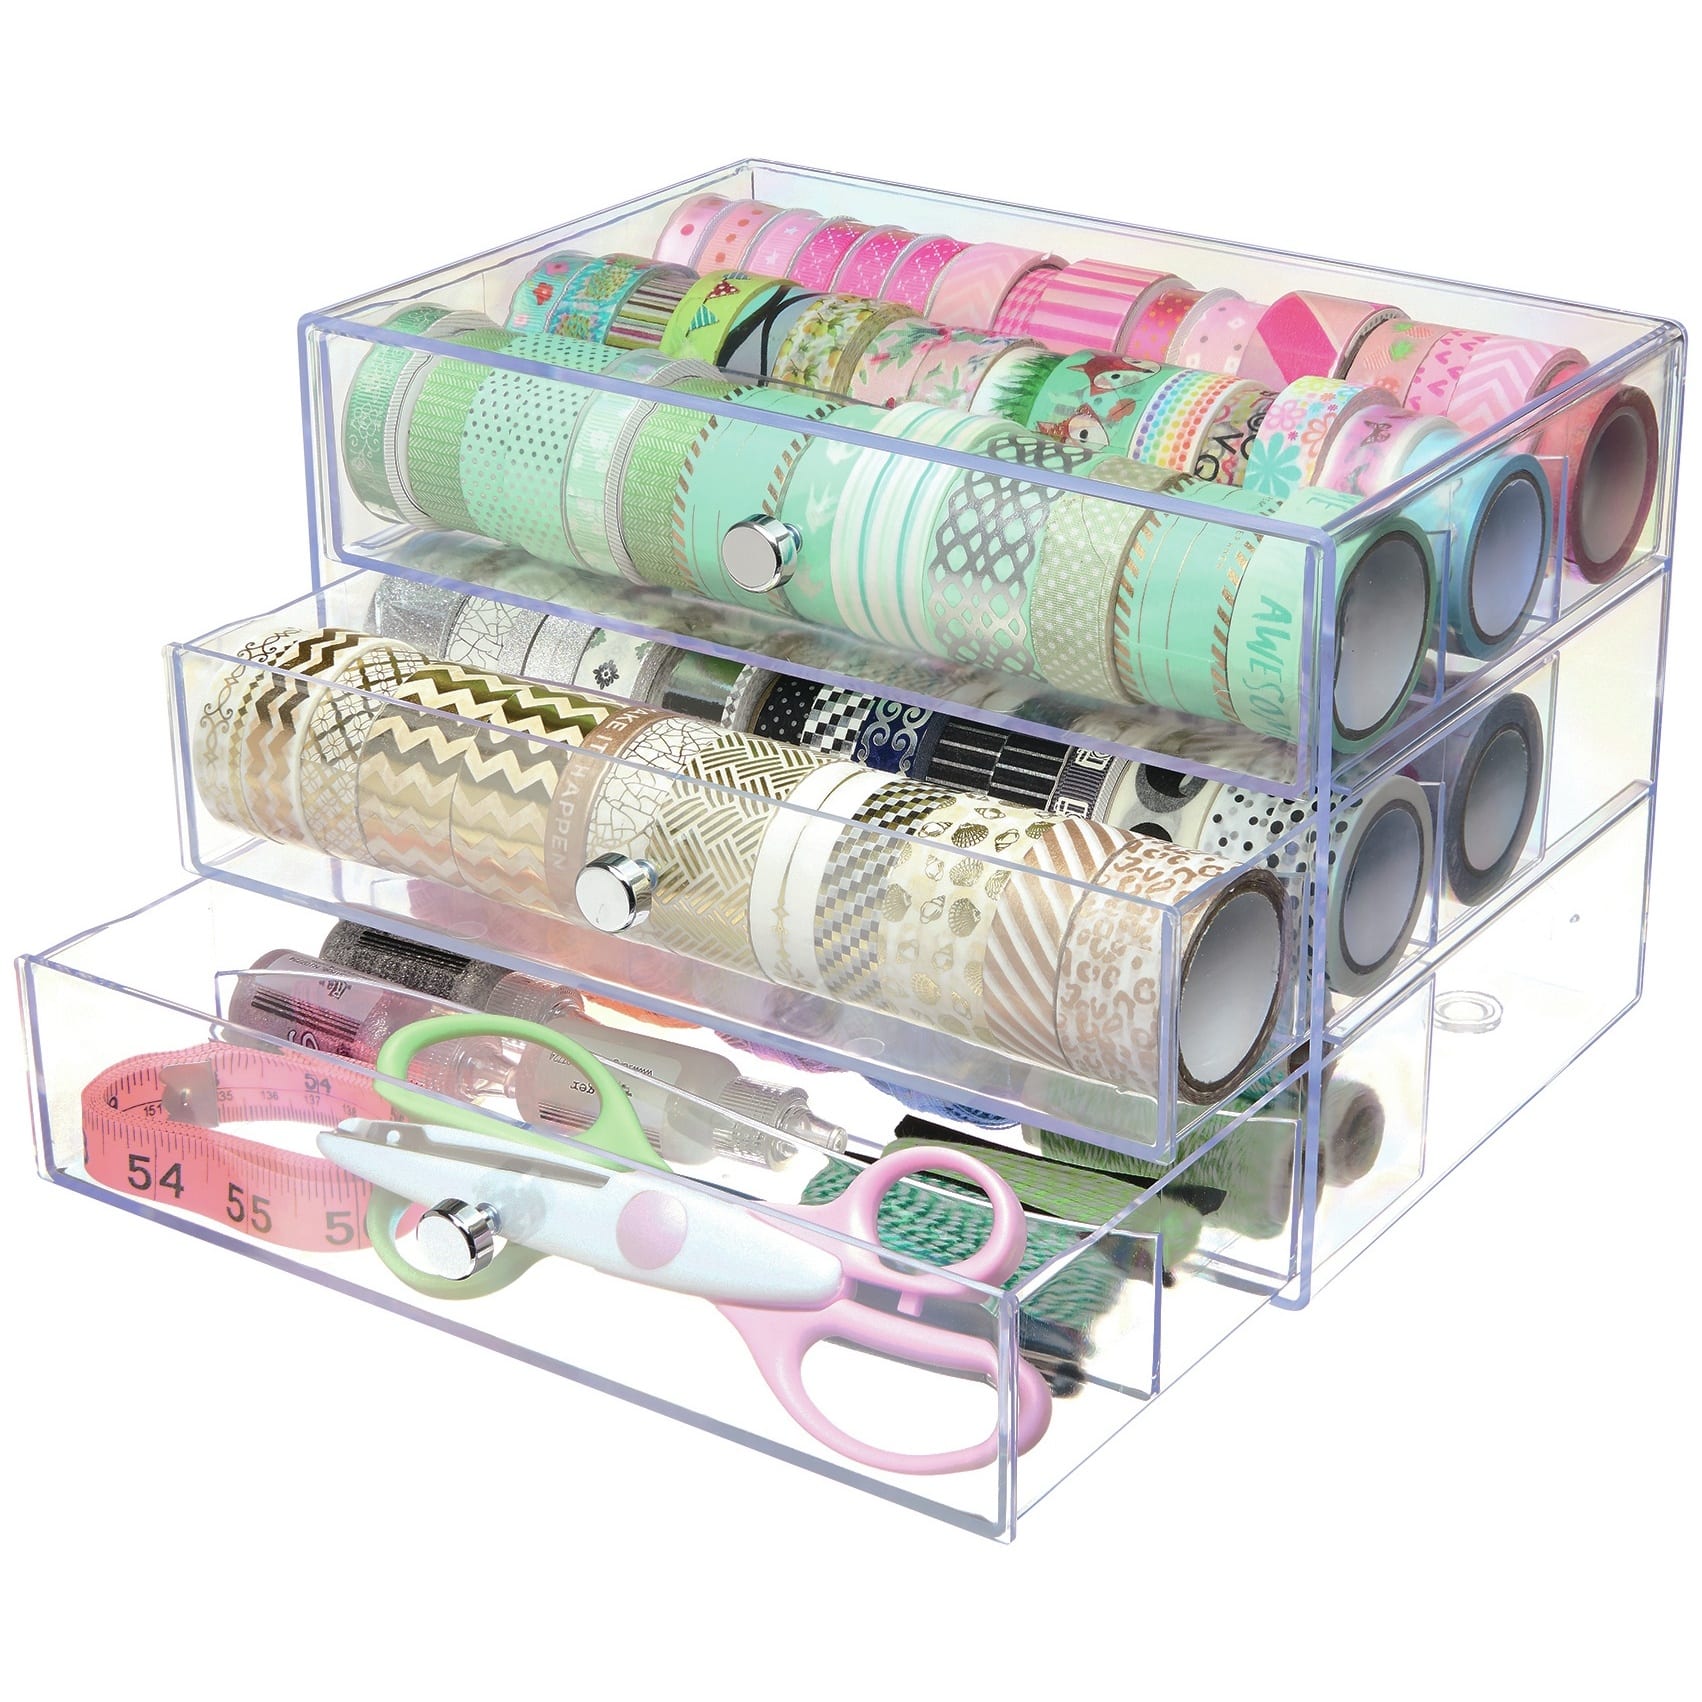 Deflecto&#xAE; Clear Washi Tape Storage Cube